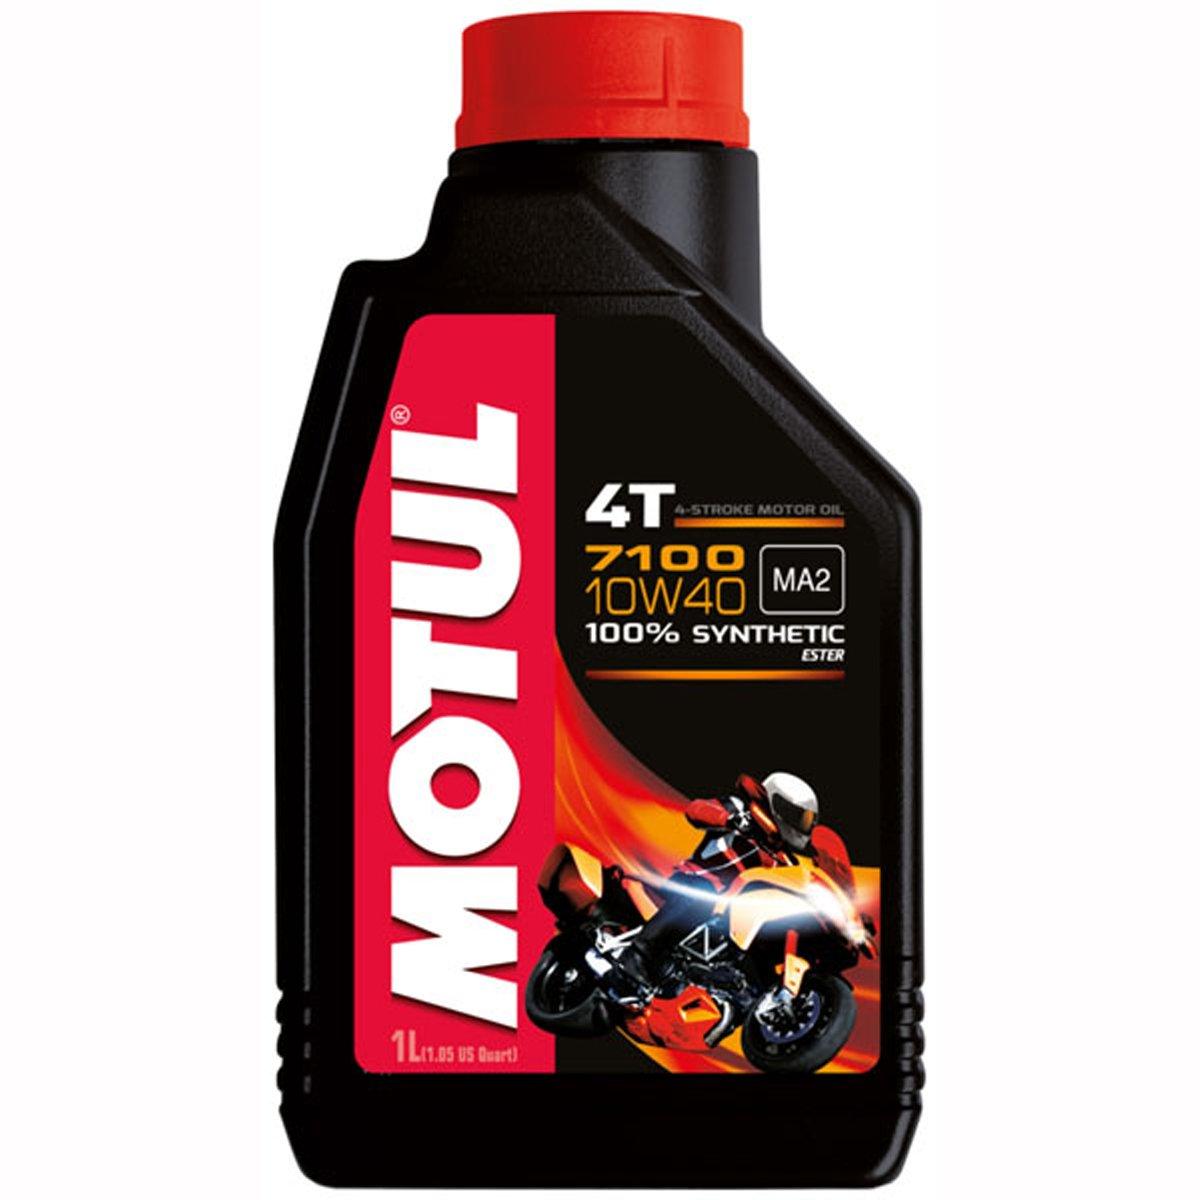 Motul Fully Synthetic 7100 10W40 4T Oil - Black - Browse our range of Care: Oils & Liquids - getgearedshop 